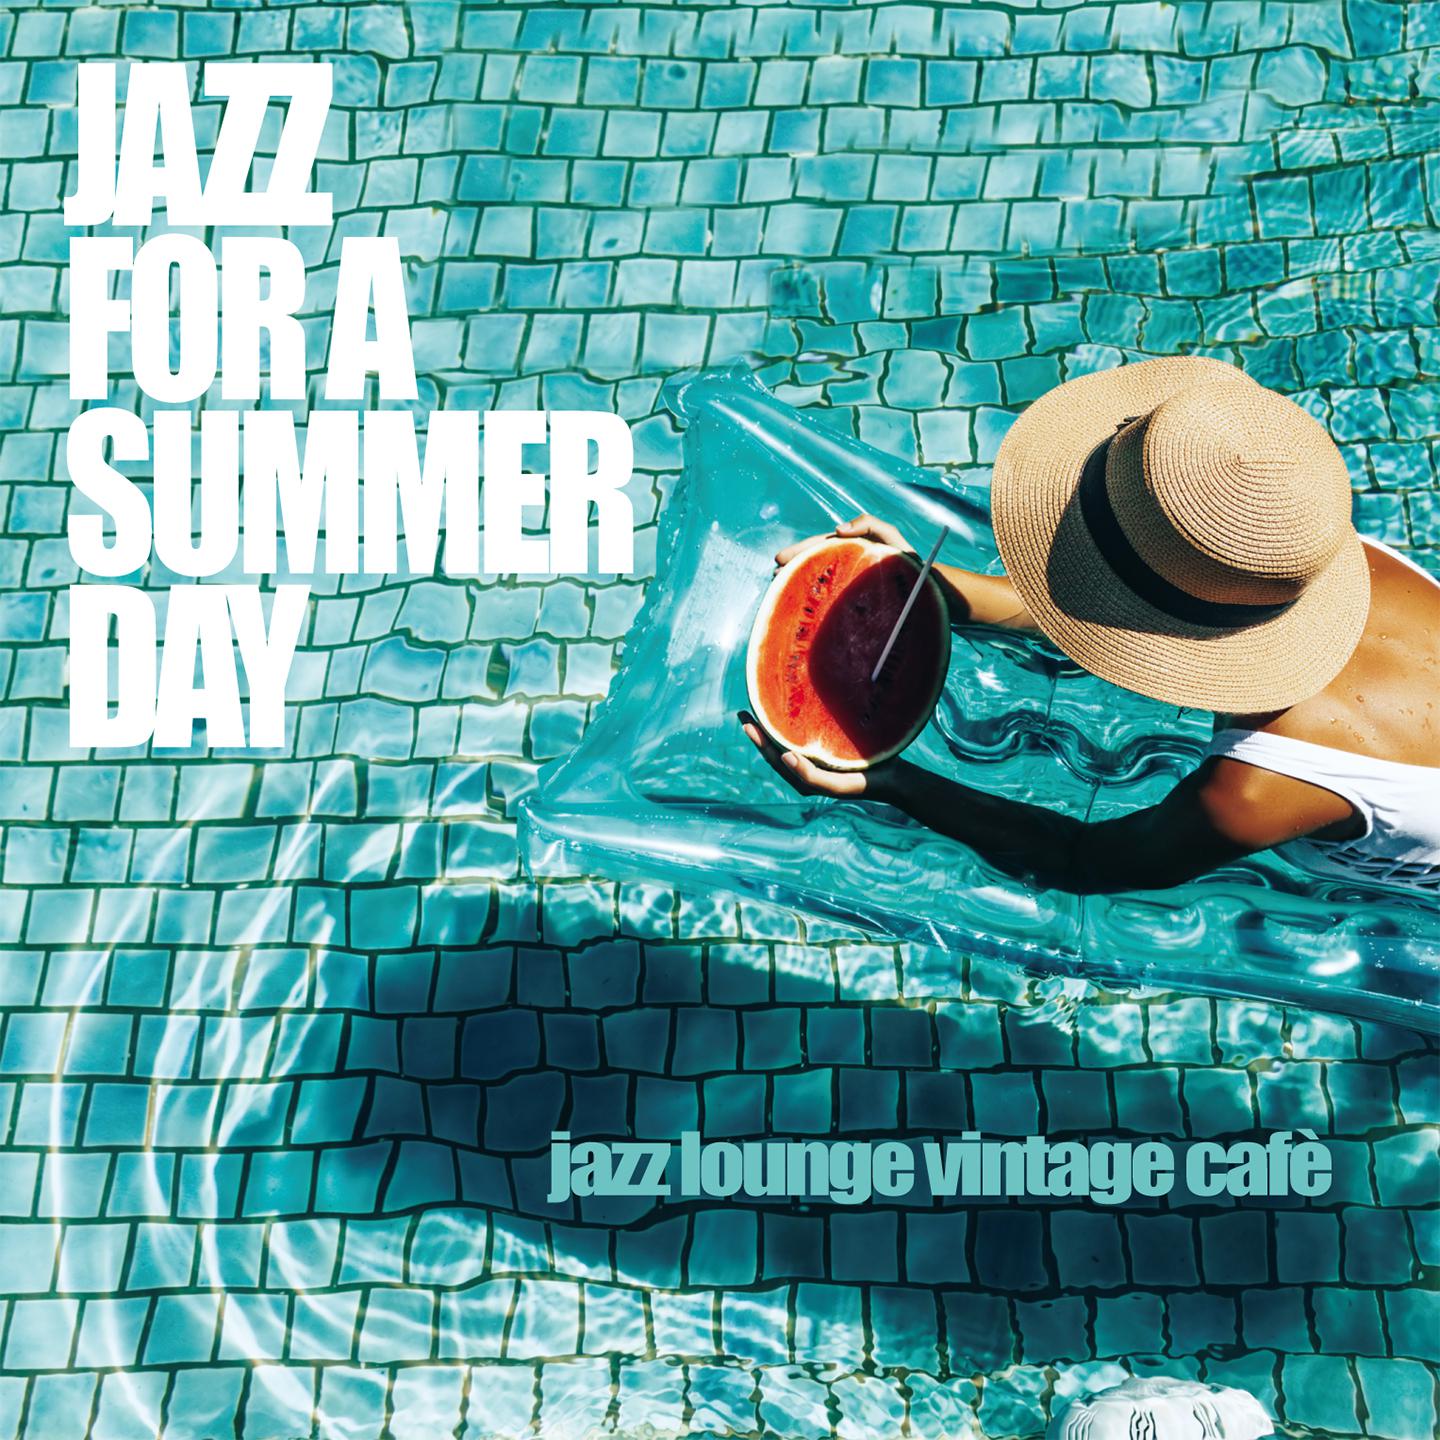 Jazz for a Summer Day Jazz Lounge Vintage Cafe